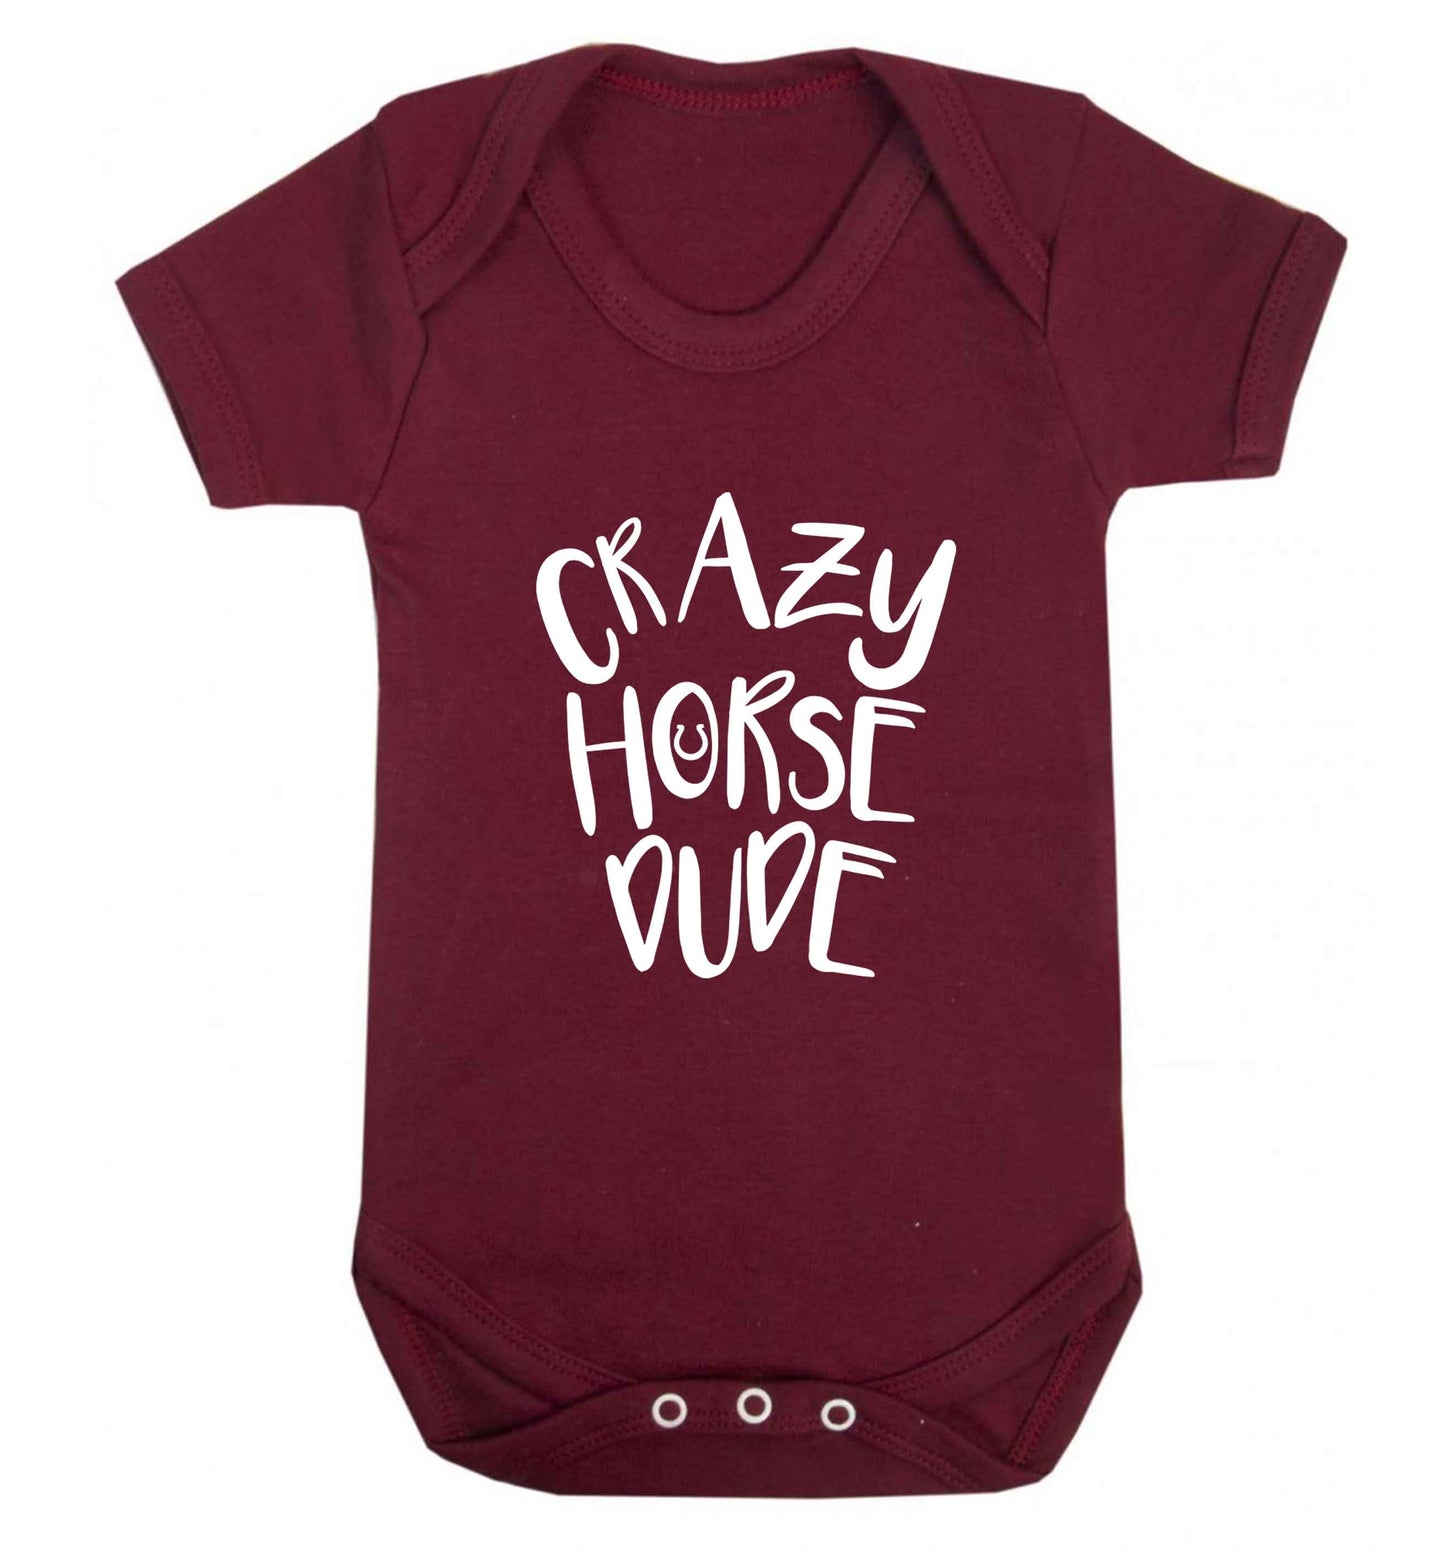 Crazy horse dude baby vest maroon 18-24 months